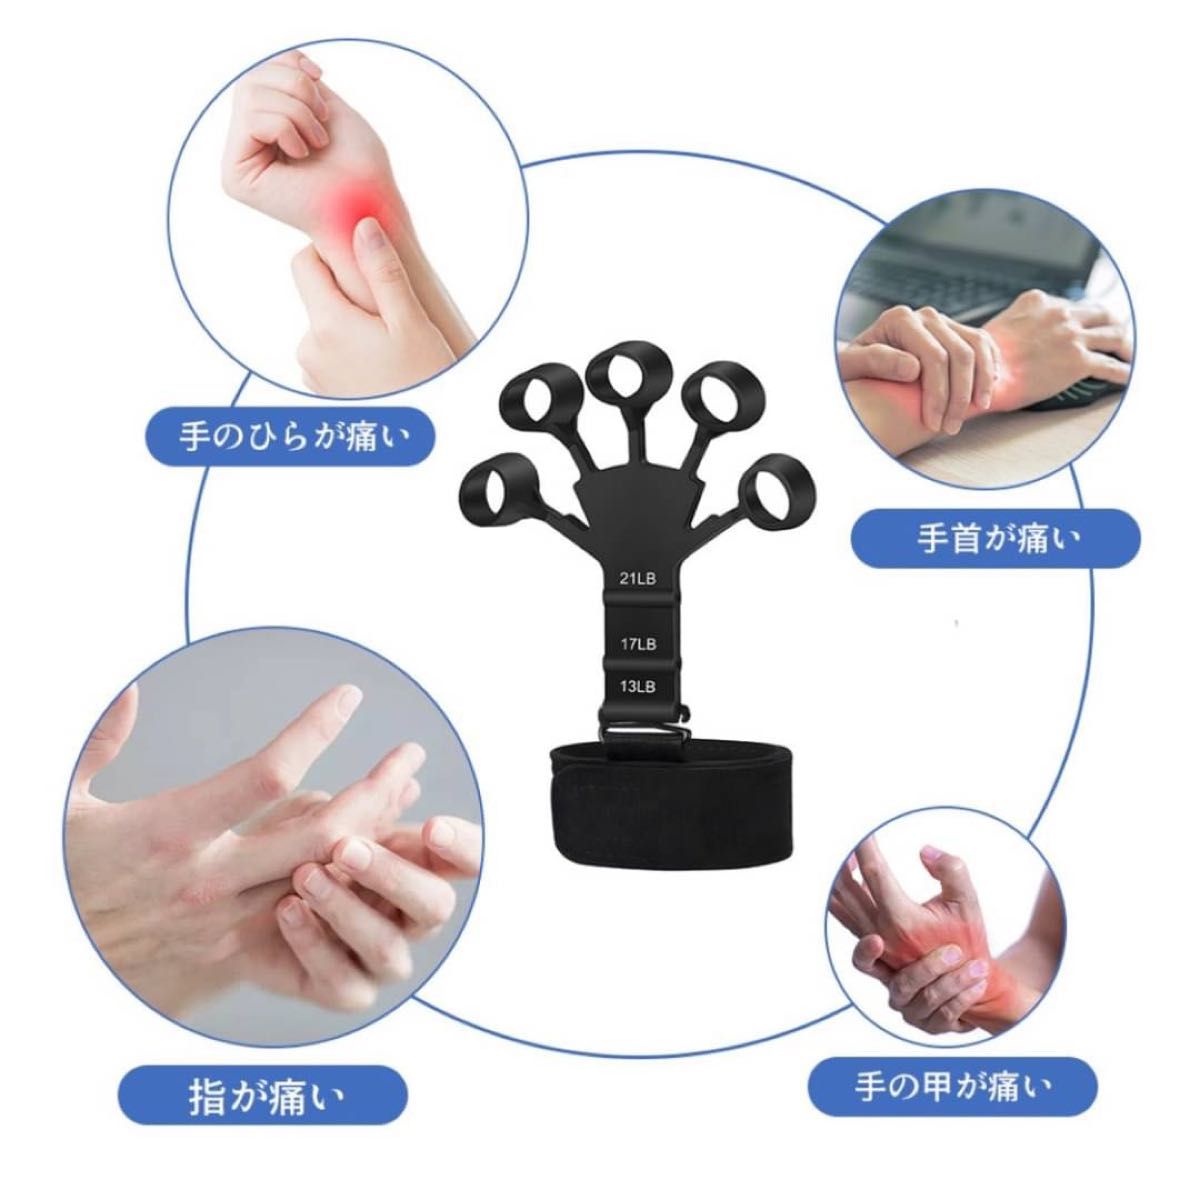 【TikTok話題】フィンガーパワー 2個 筋トレ 握力 指の強化 トレーニング 